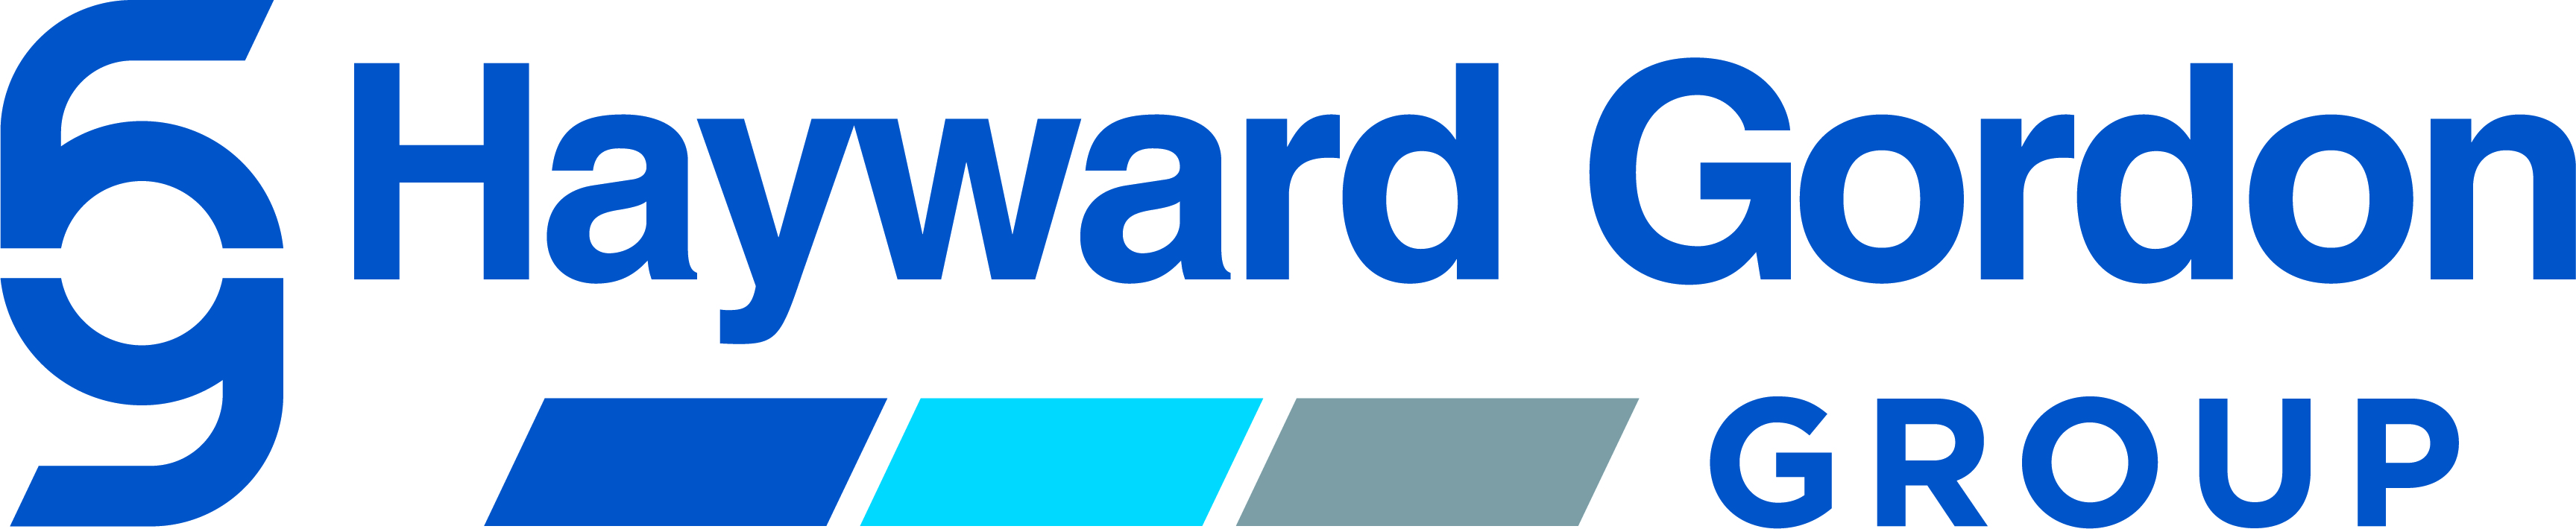 Hayward Gordon Group